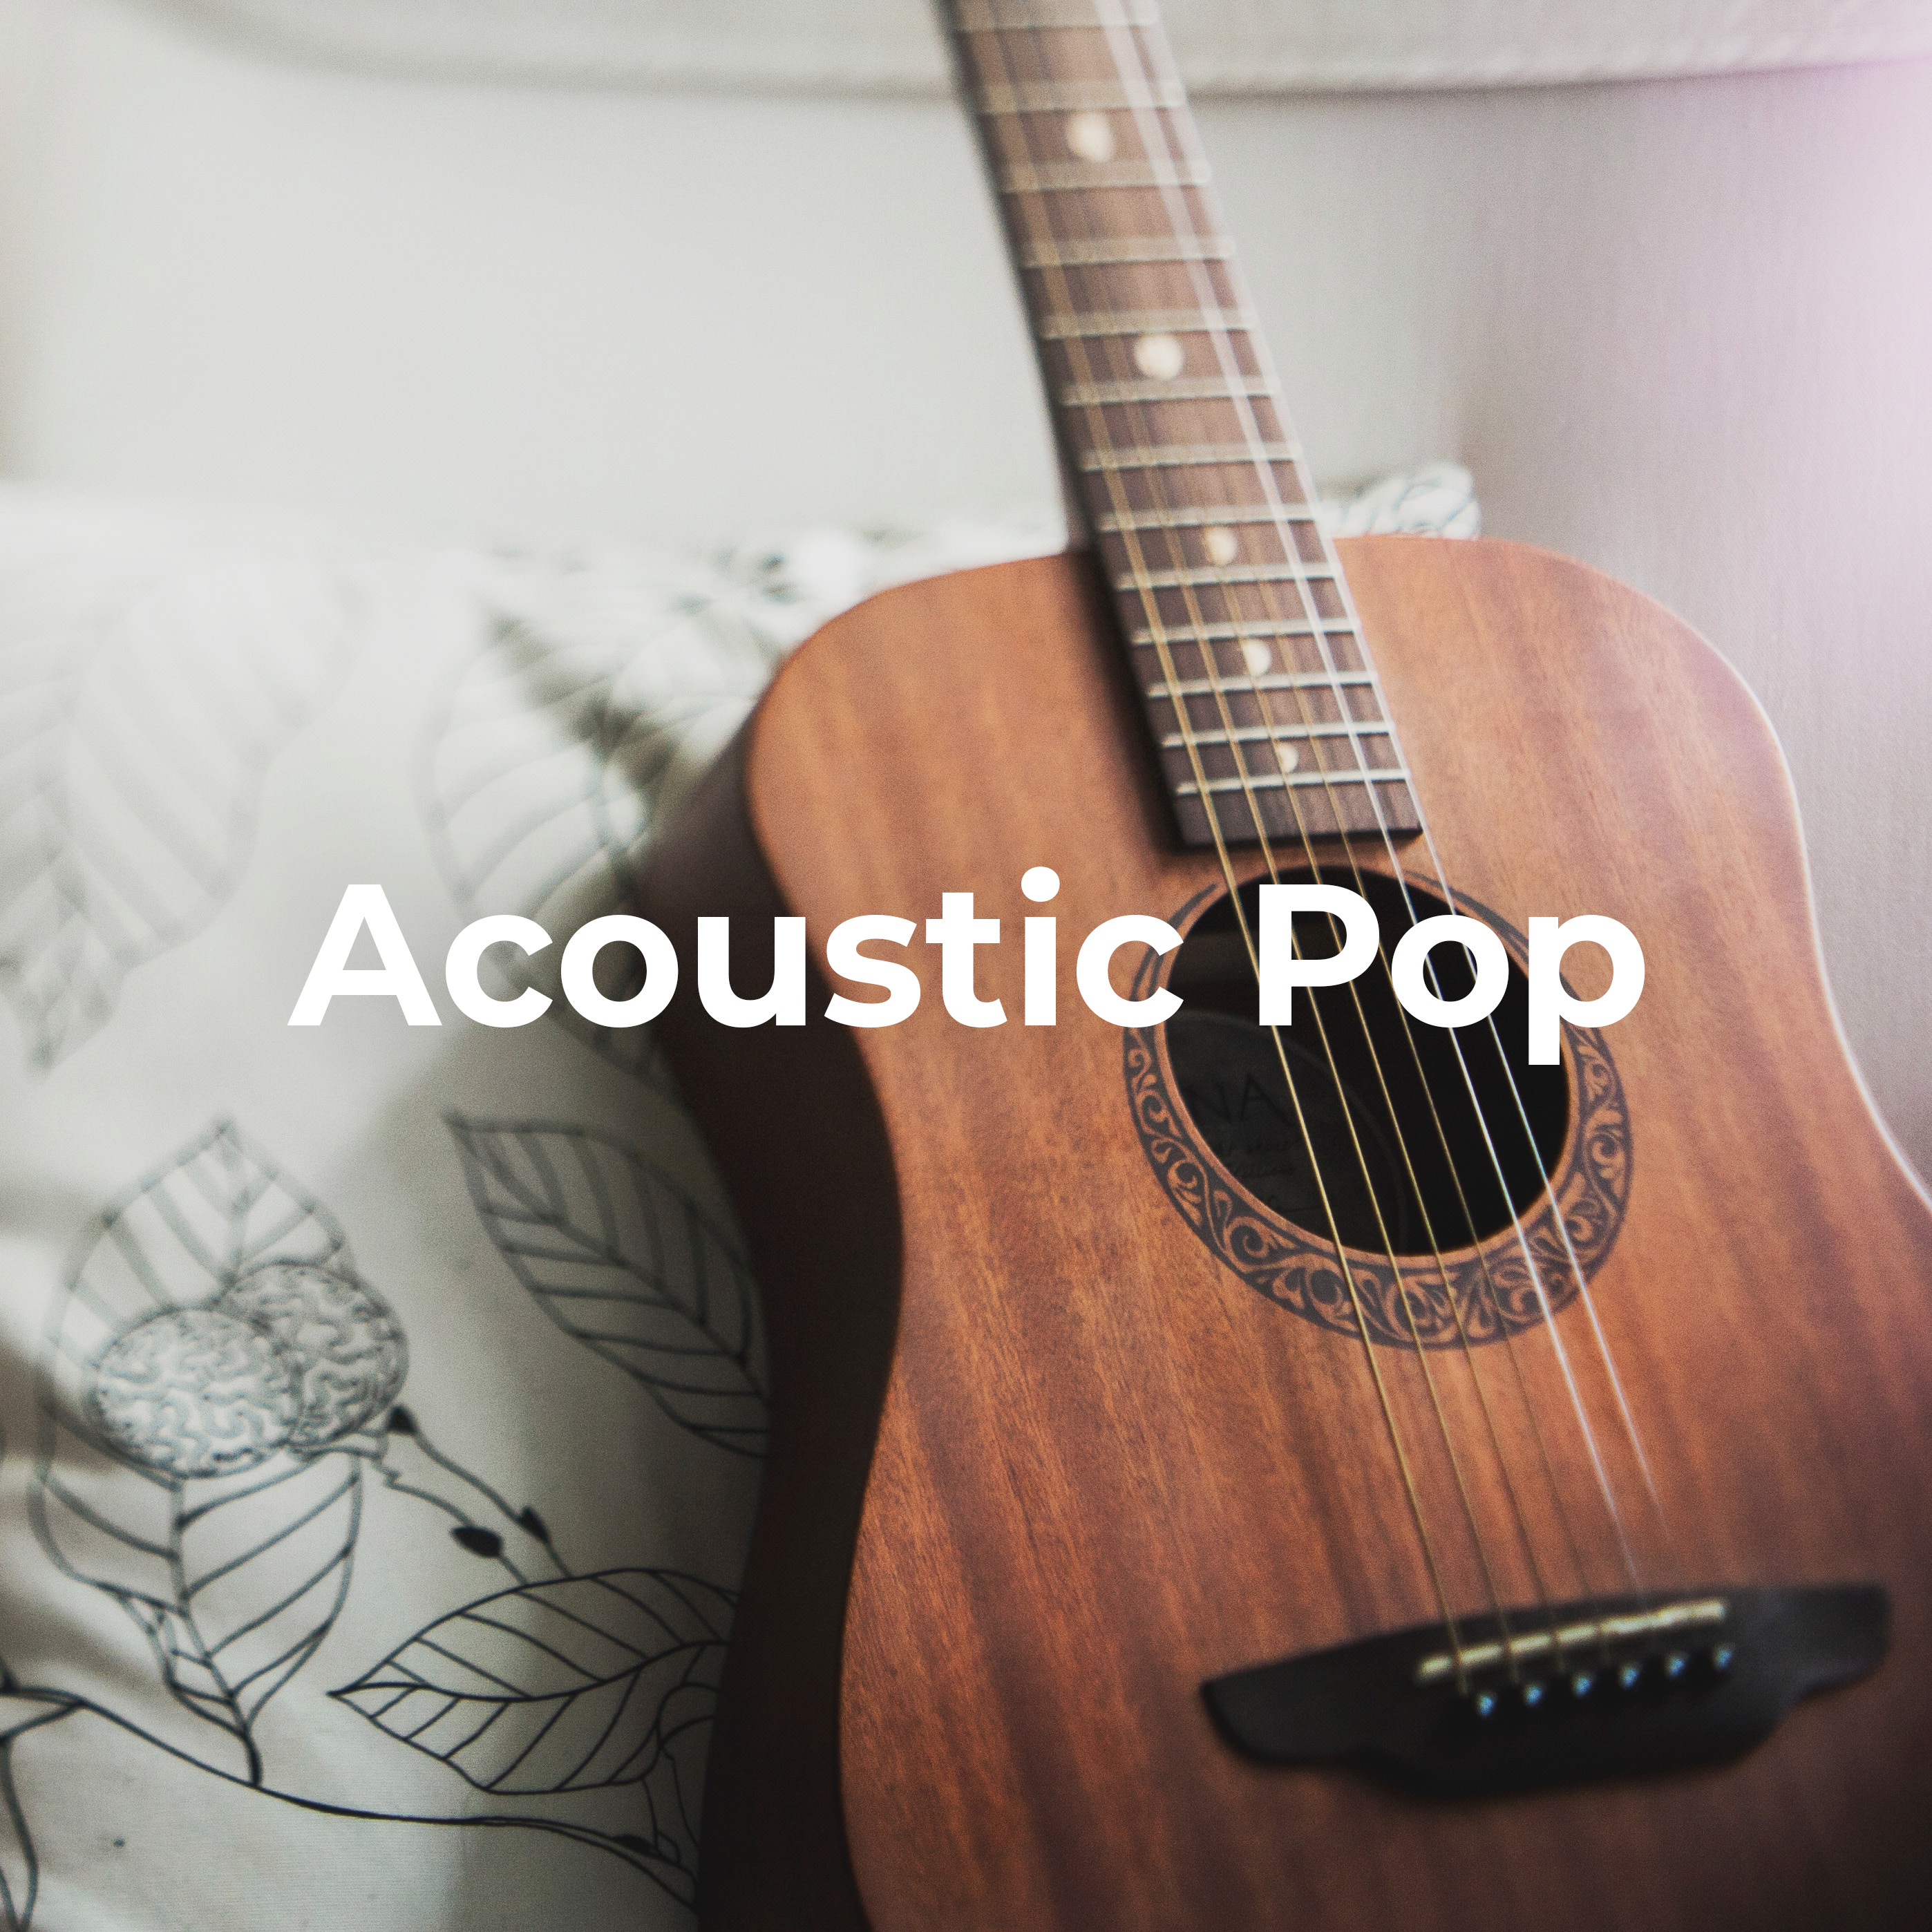 Acoustic Pop Jason Mraz Lorde James Bay Ed Sheeran & Co. Playlist